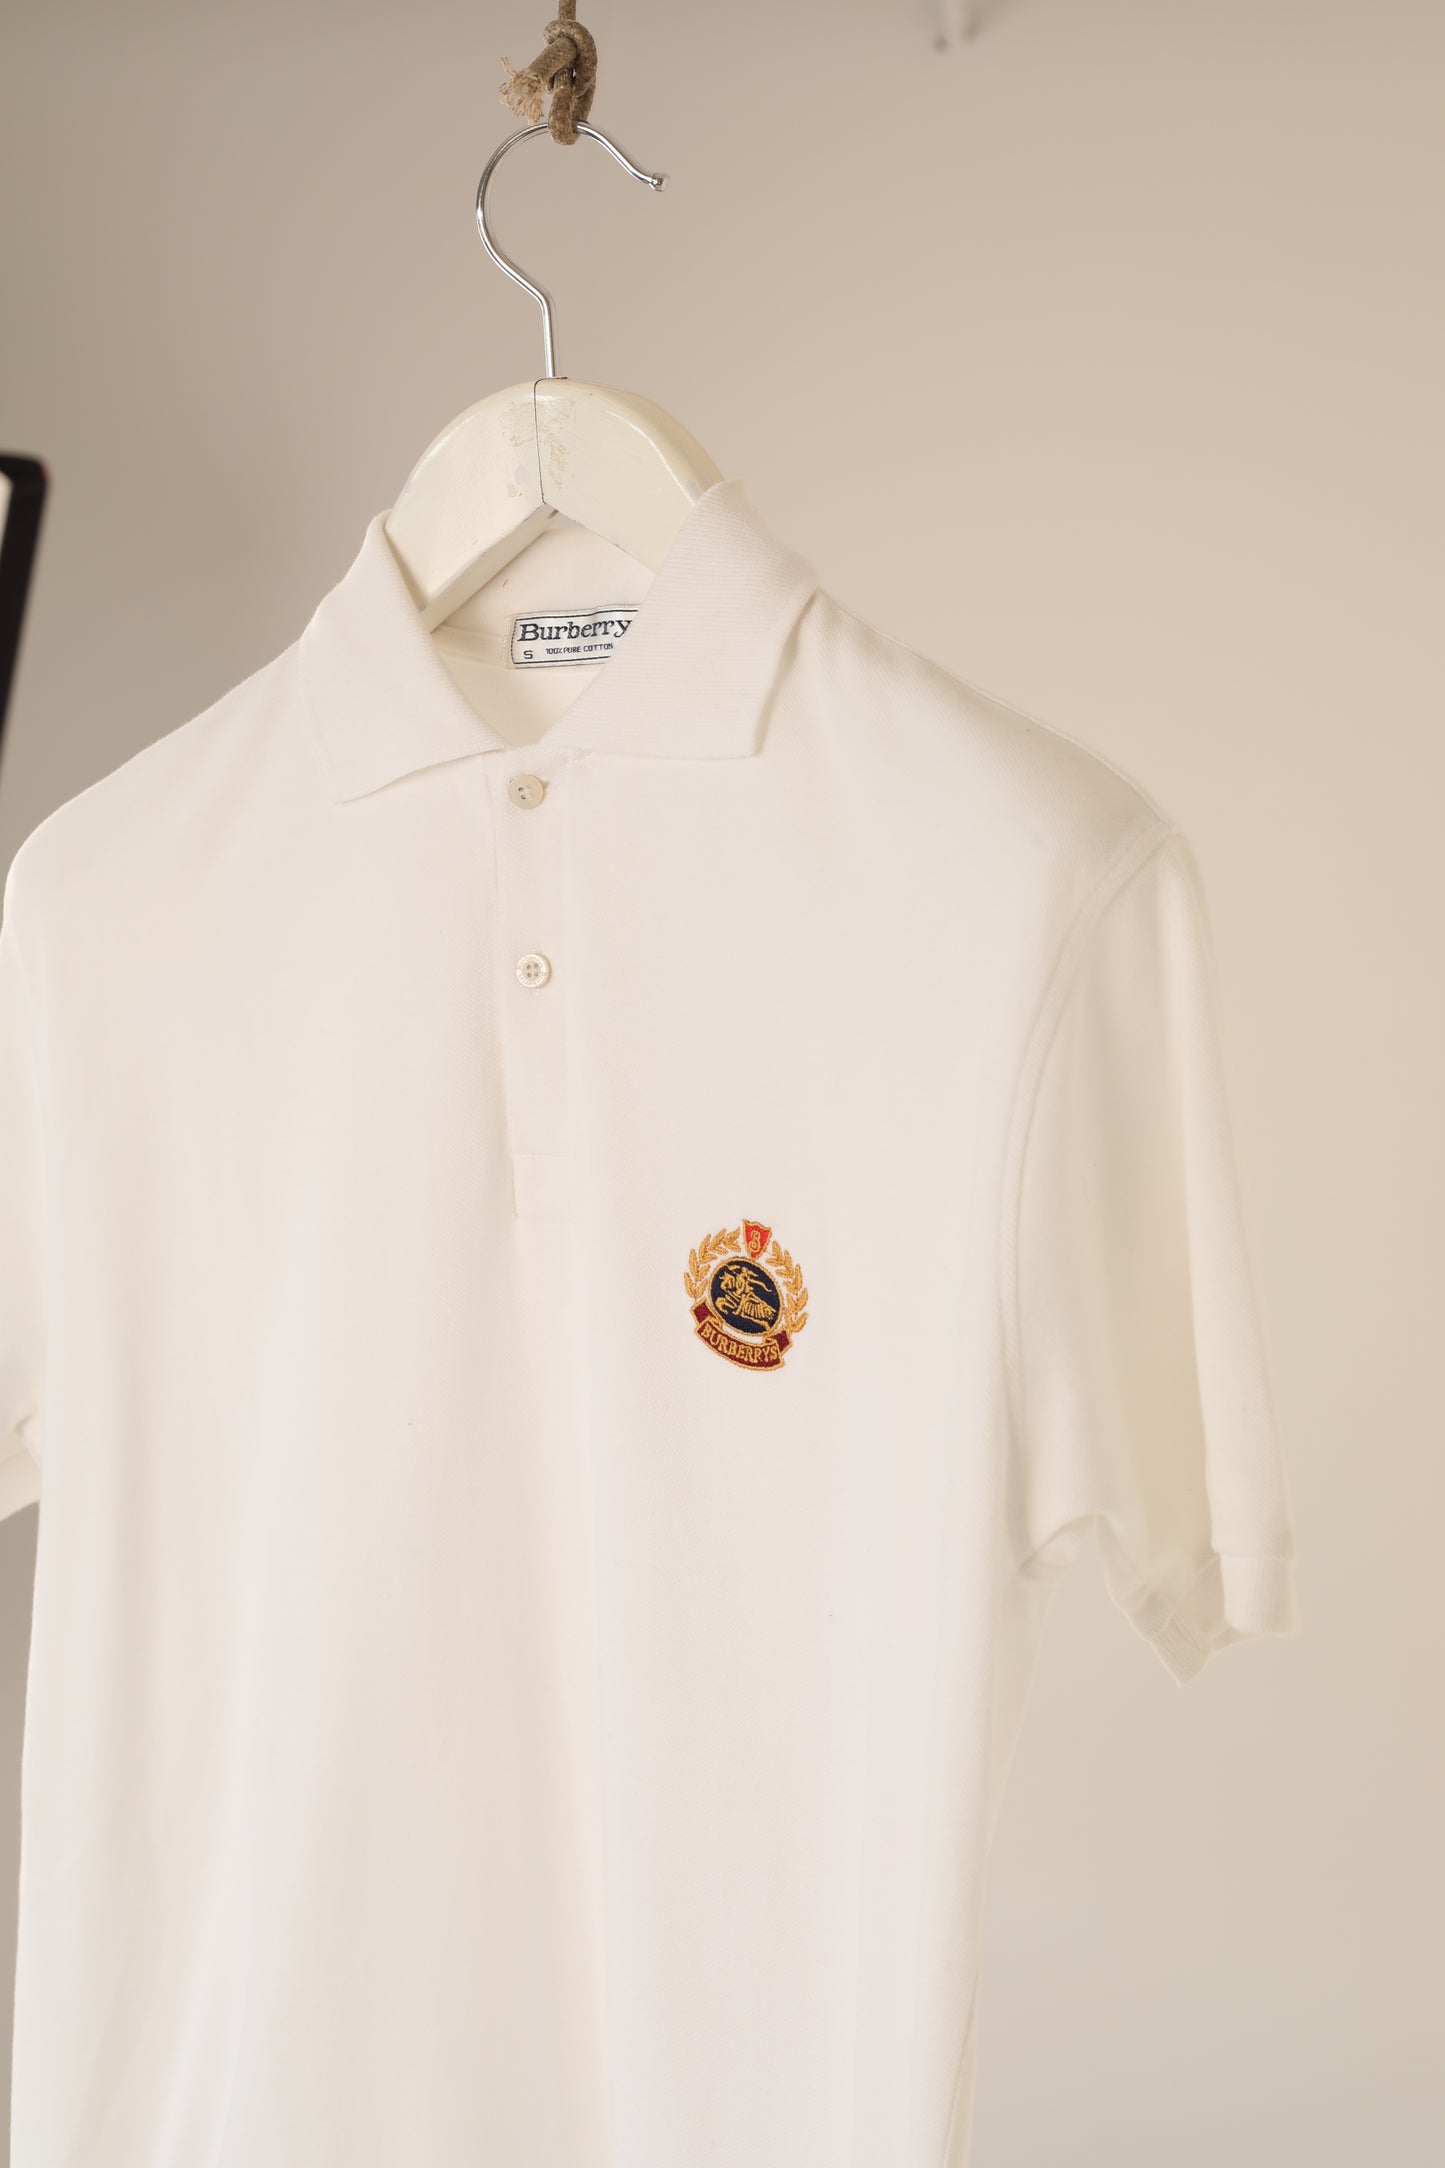 Vintage 90s Burberry's of London crest logo polo shirt